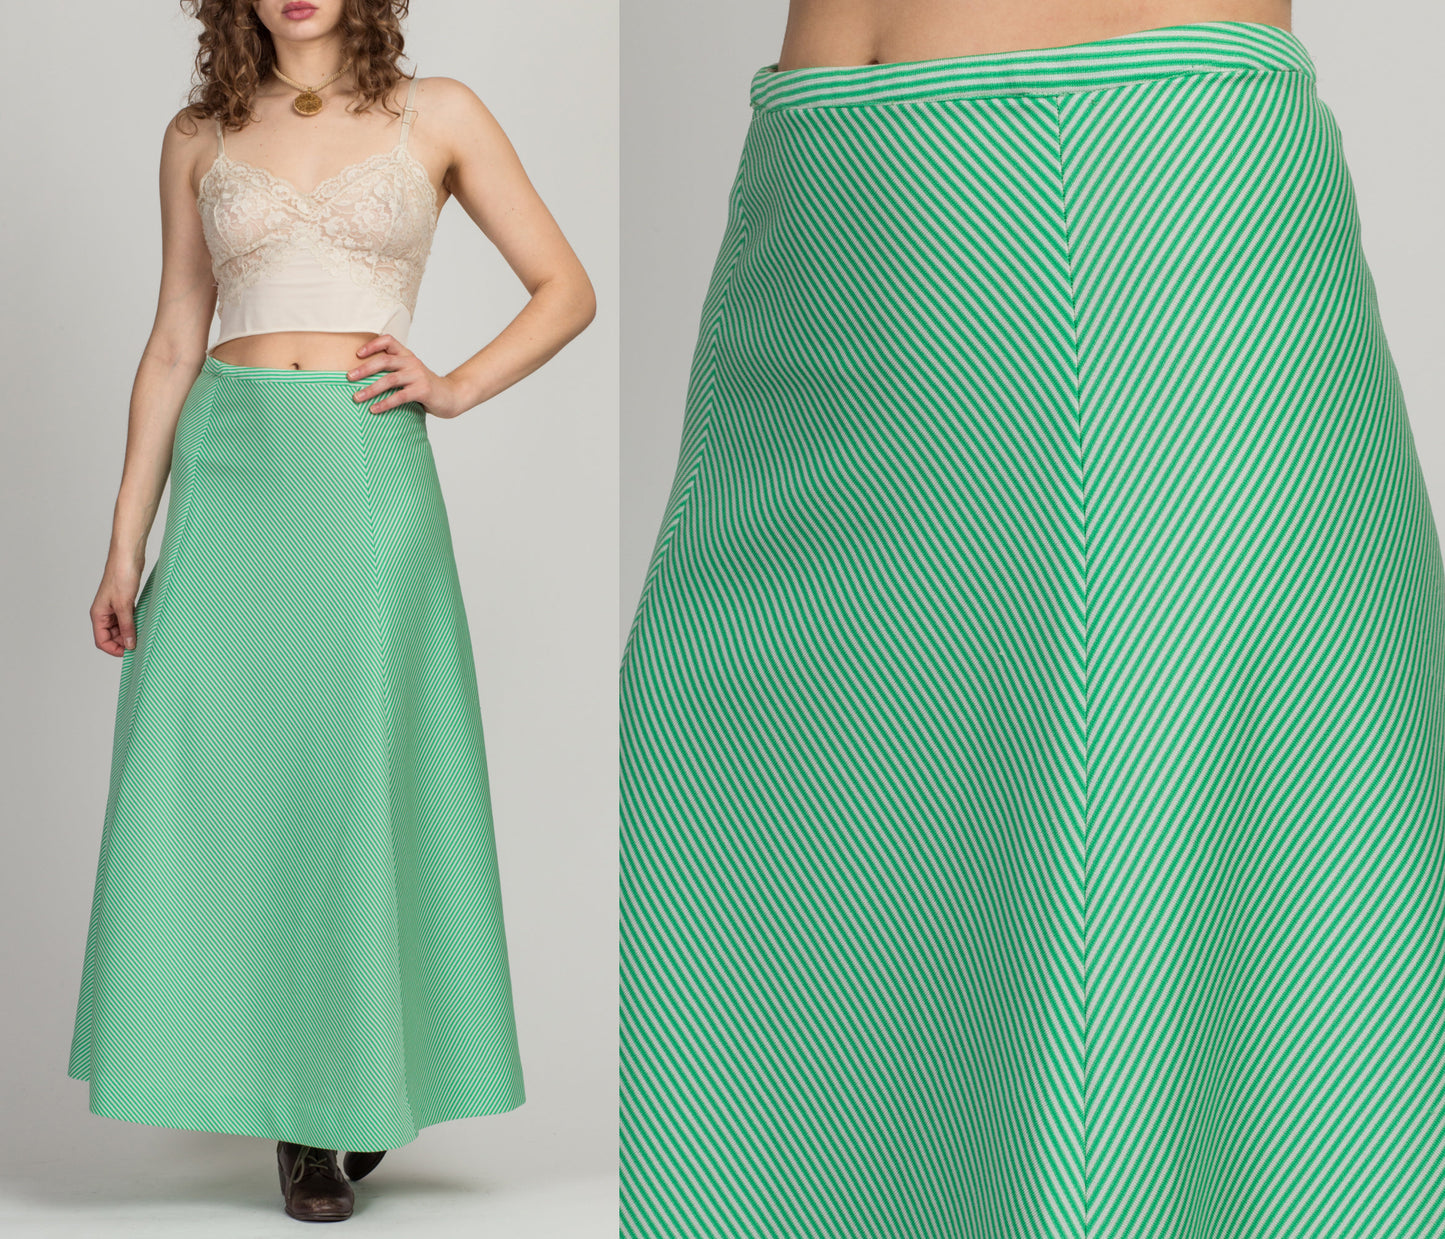 70s Green & White Striped Maxi Skirt - Medium 